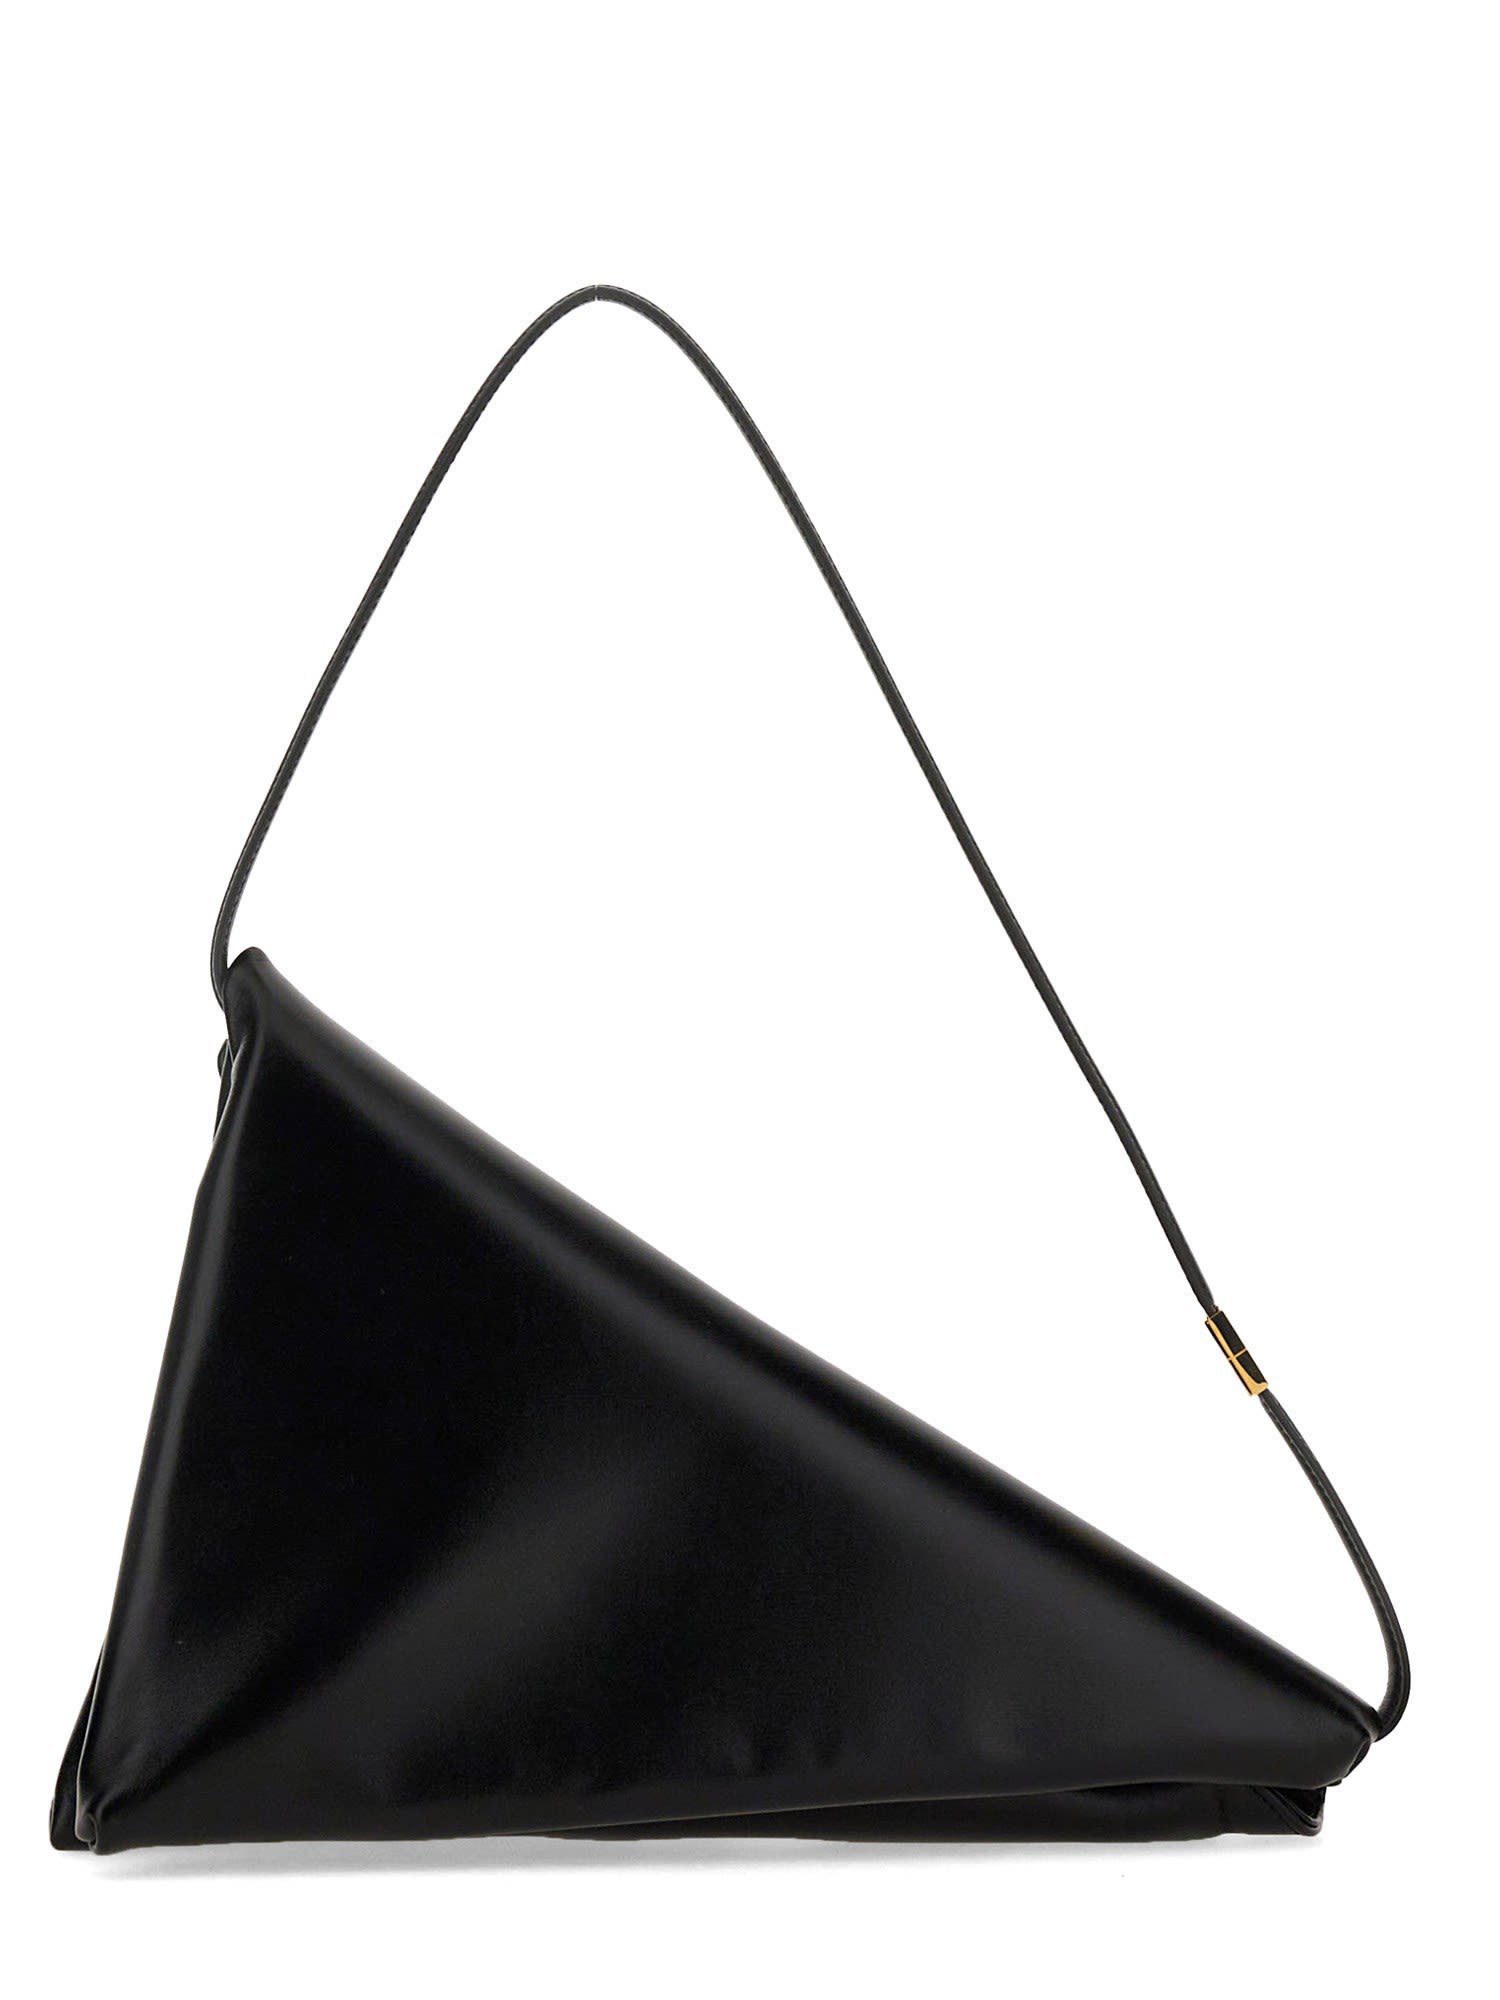 Marni Triangle Prism Bag